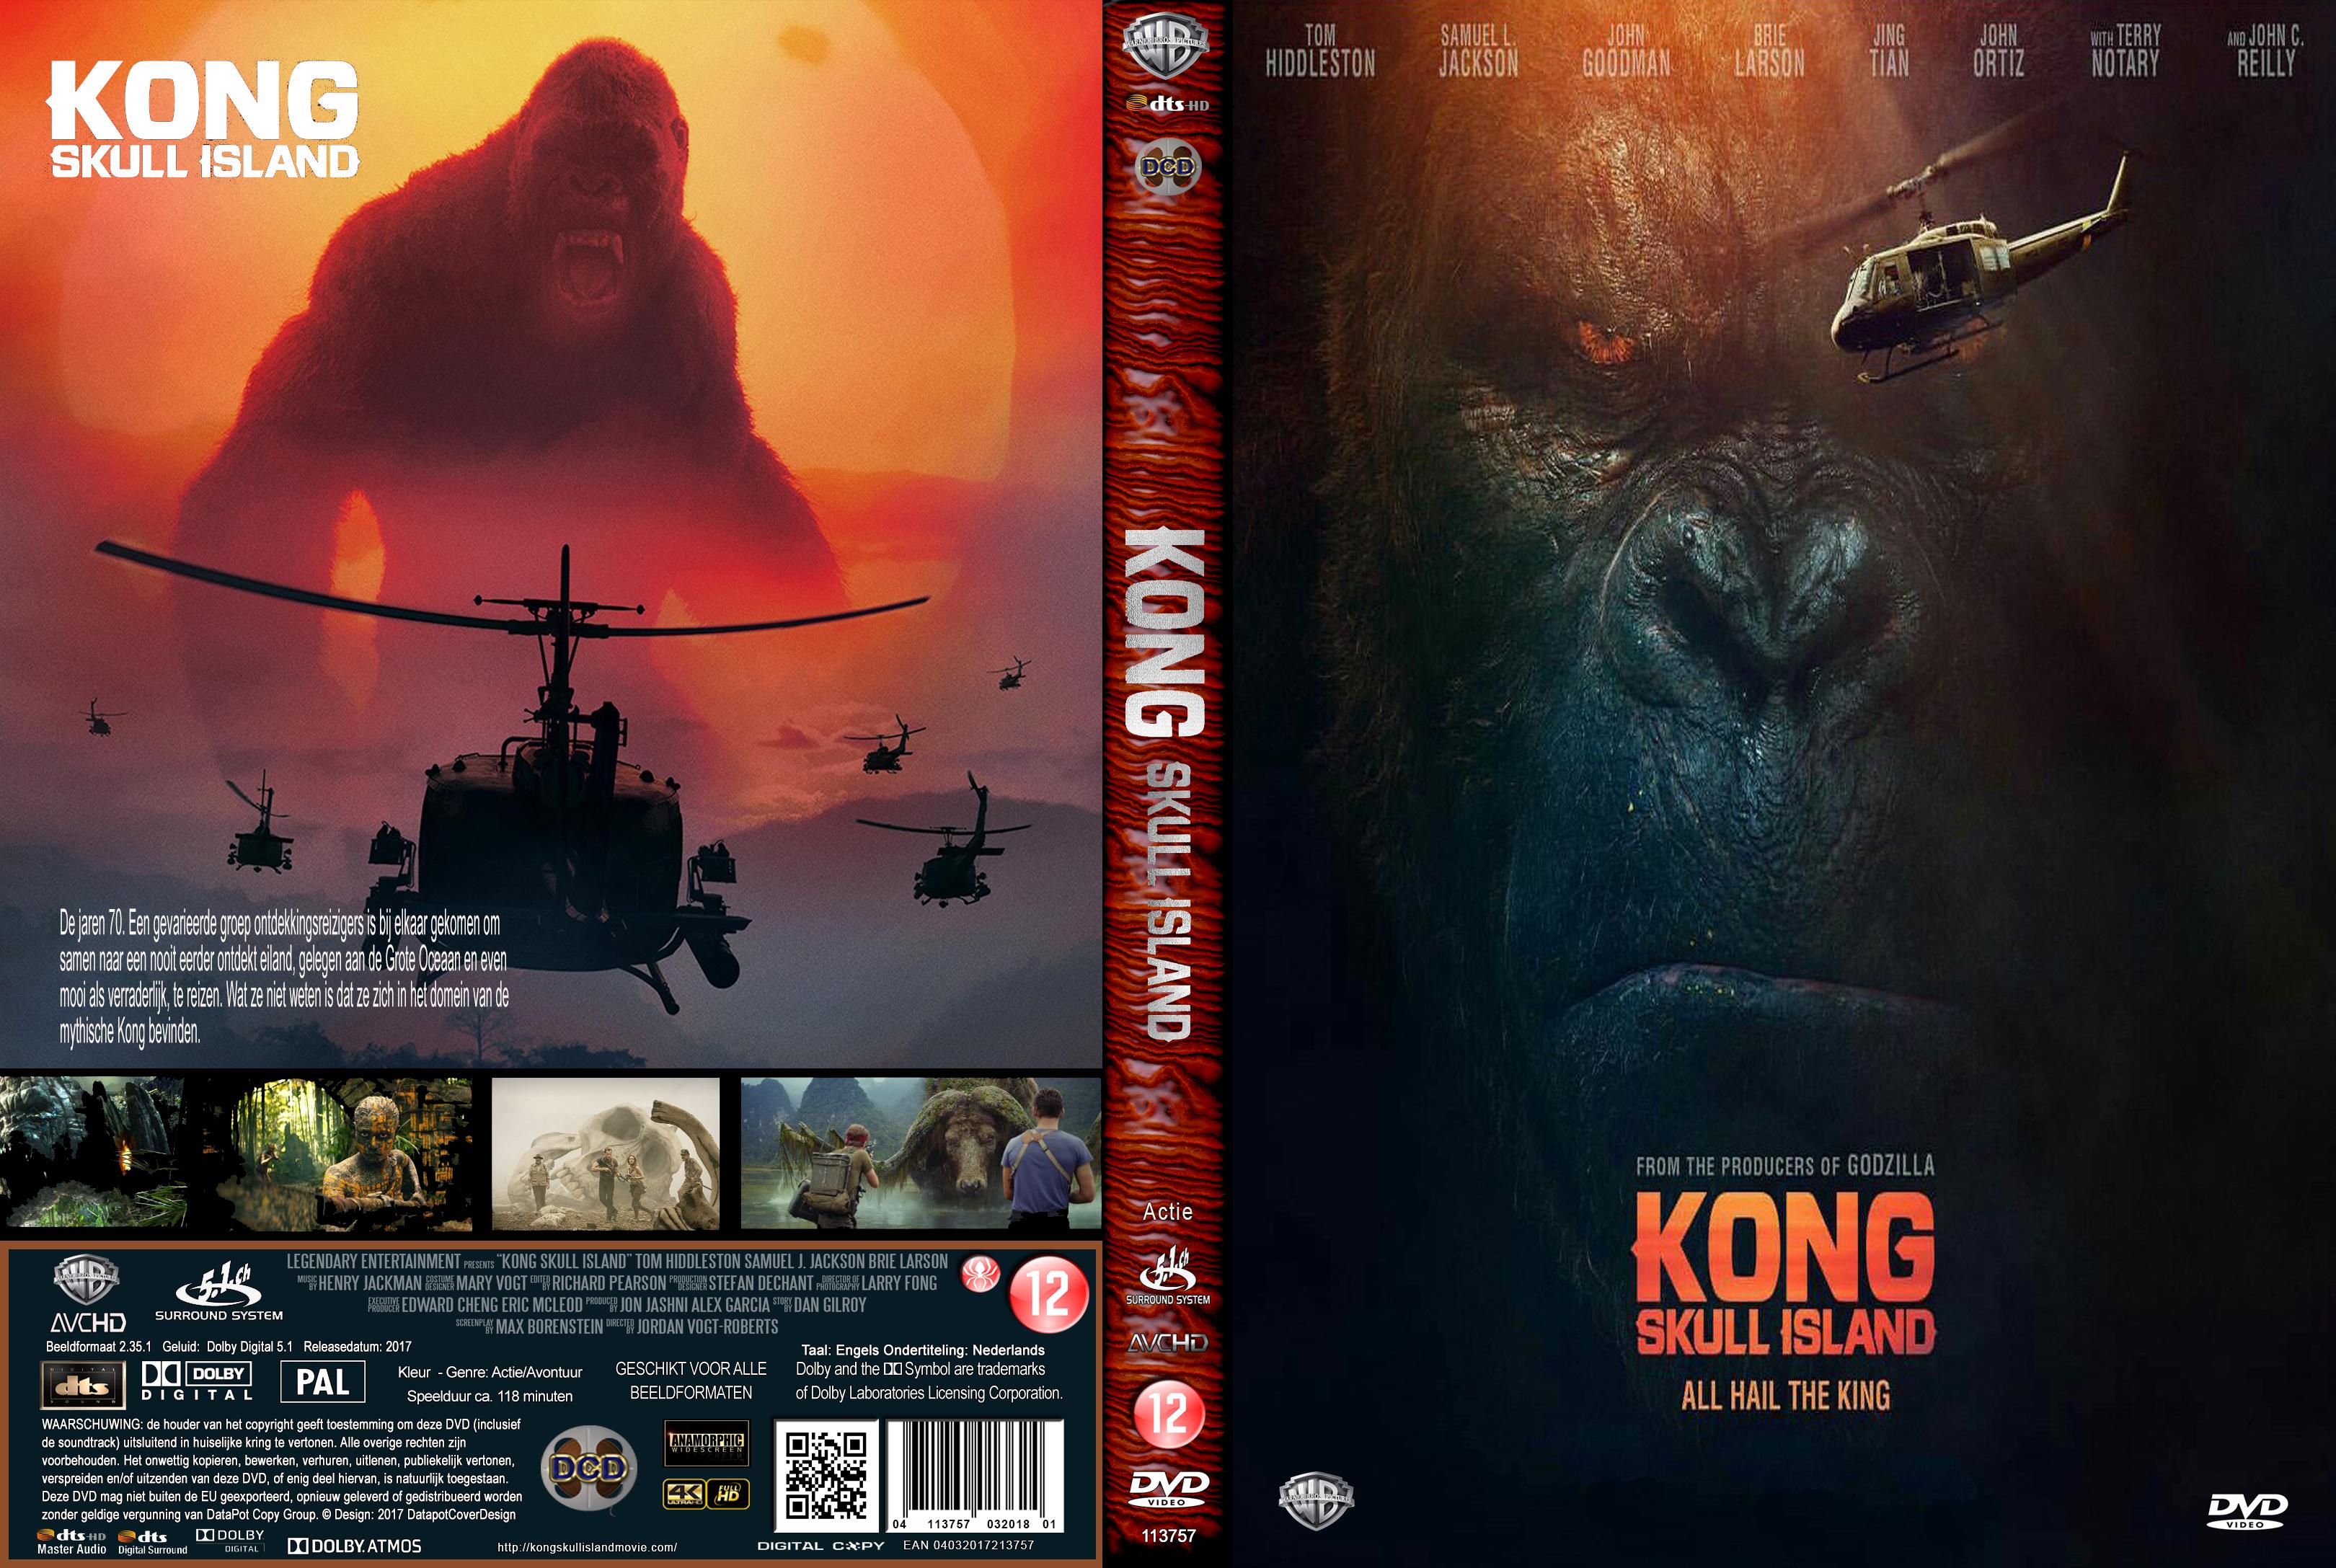 Jaquette DVD Kong: Skull Island custom